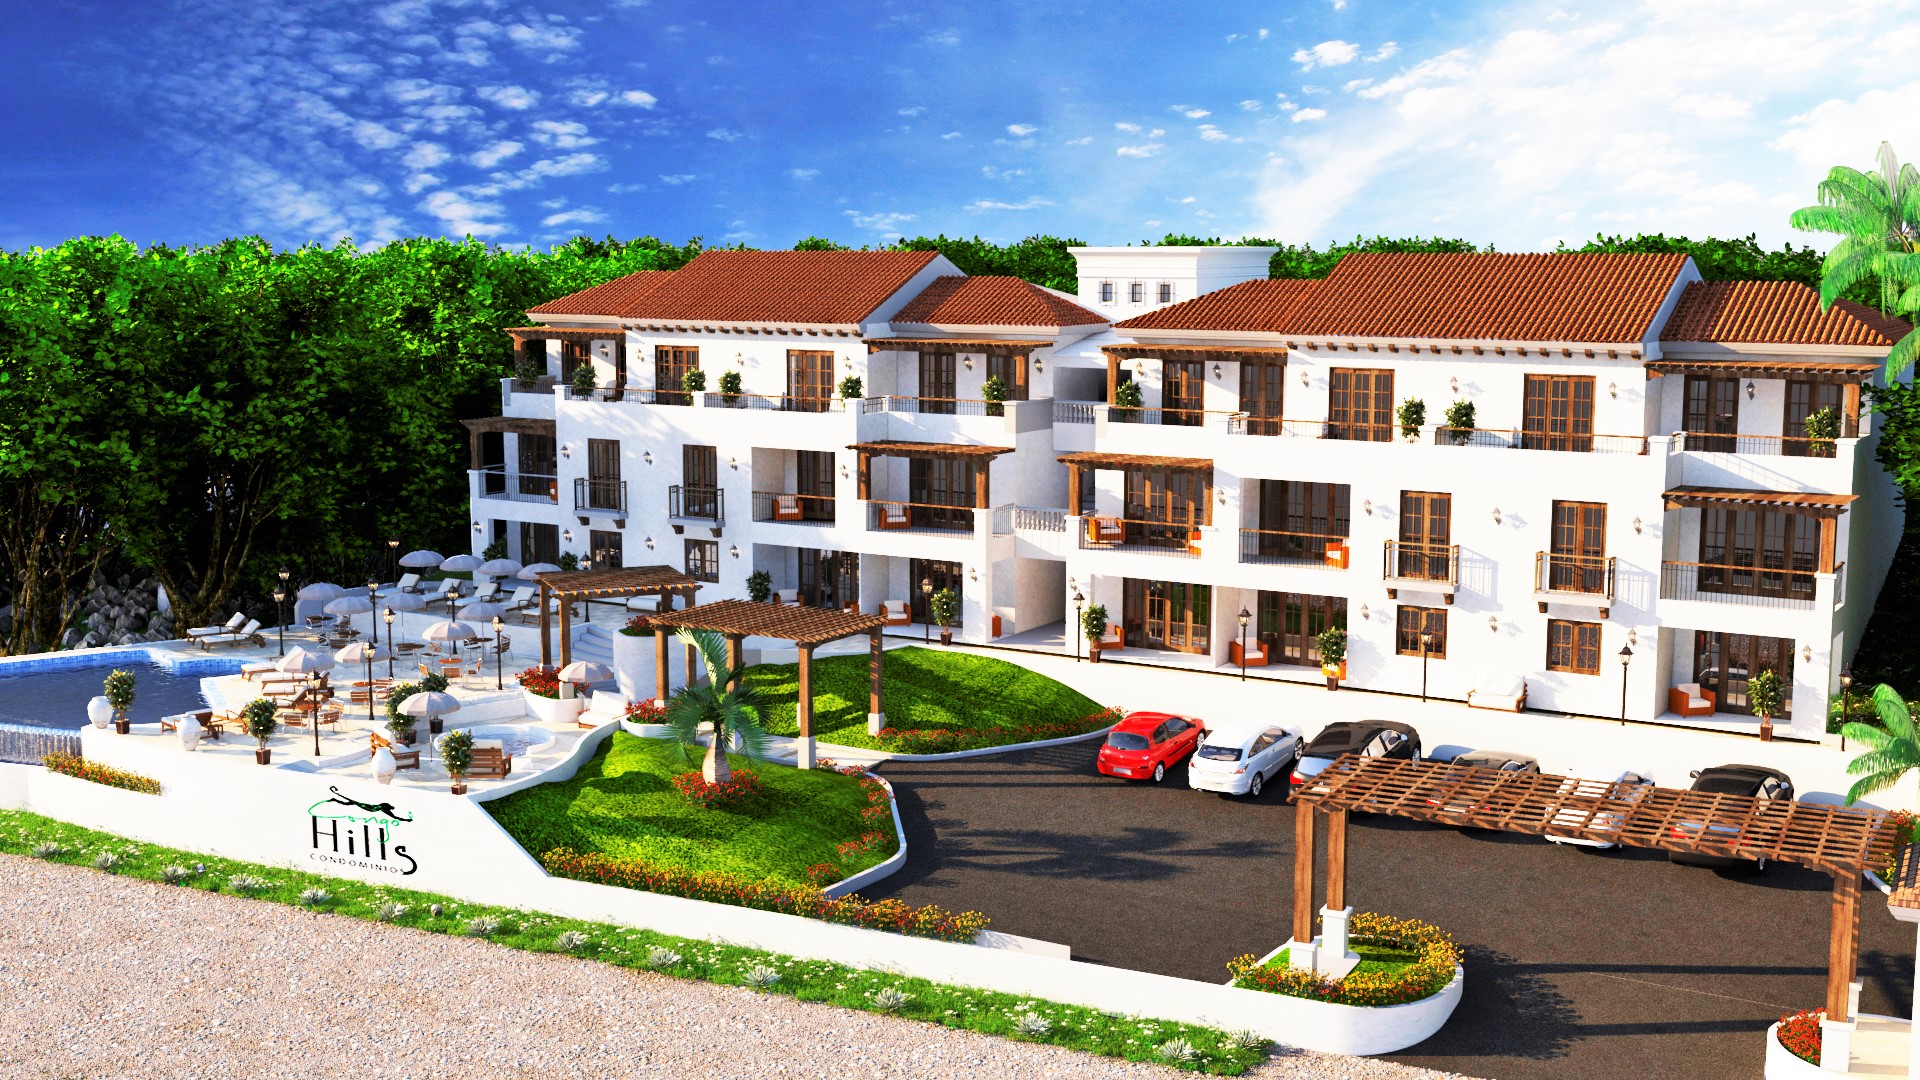 Partner with the developer or take over the condo development in San Juan Del Sur